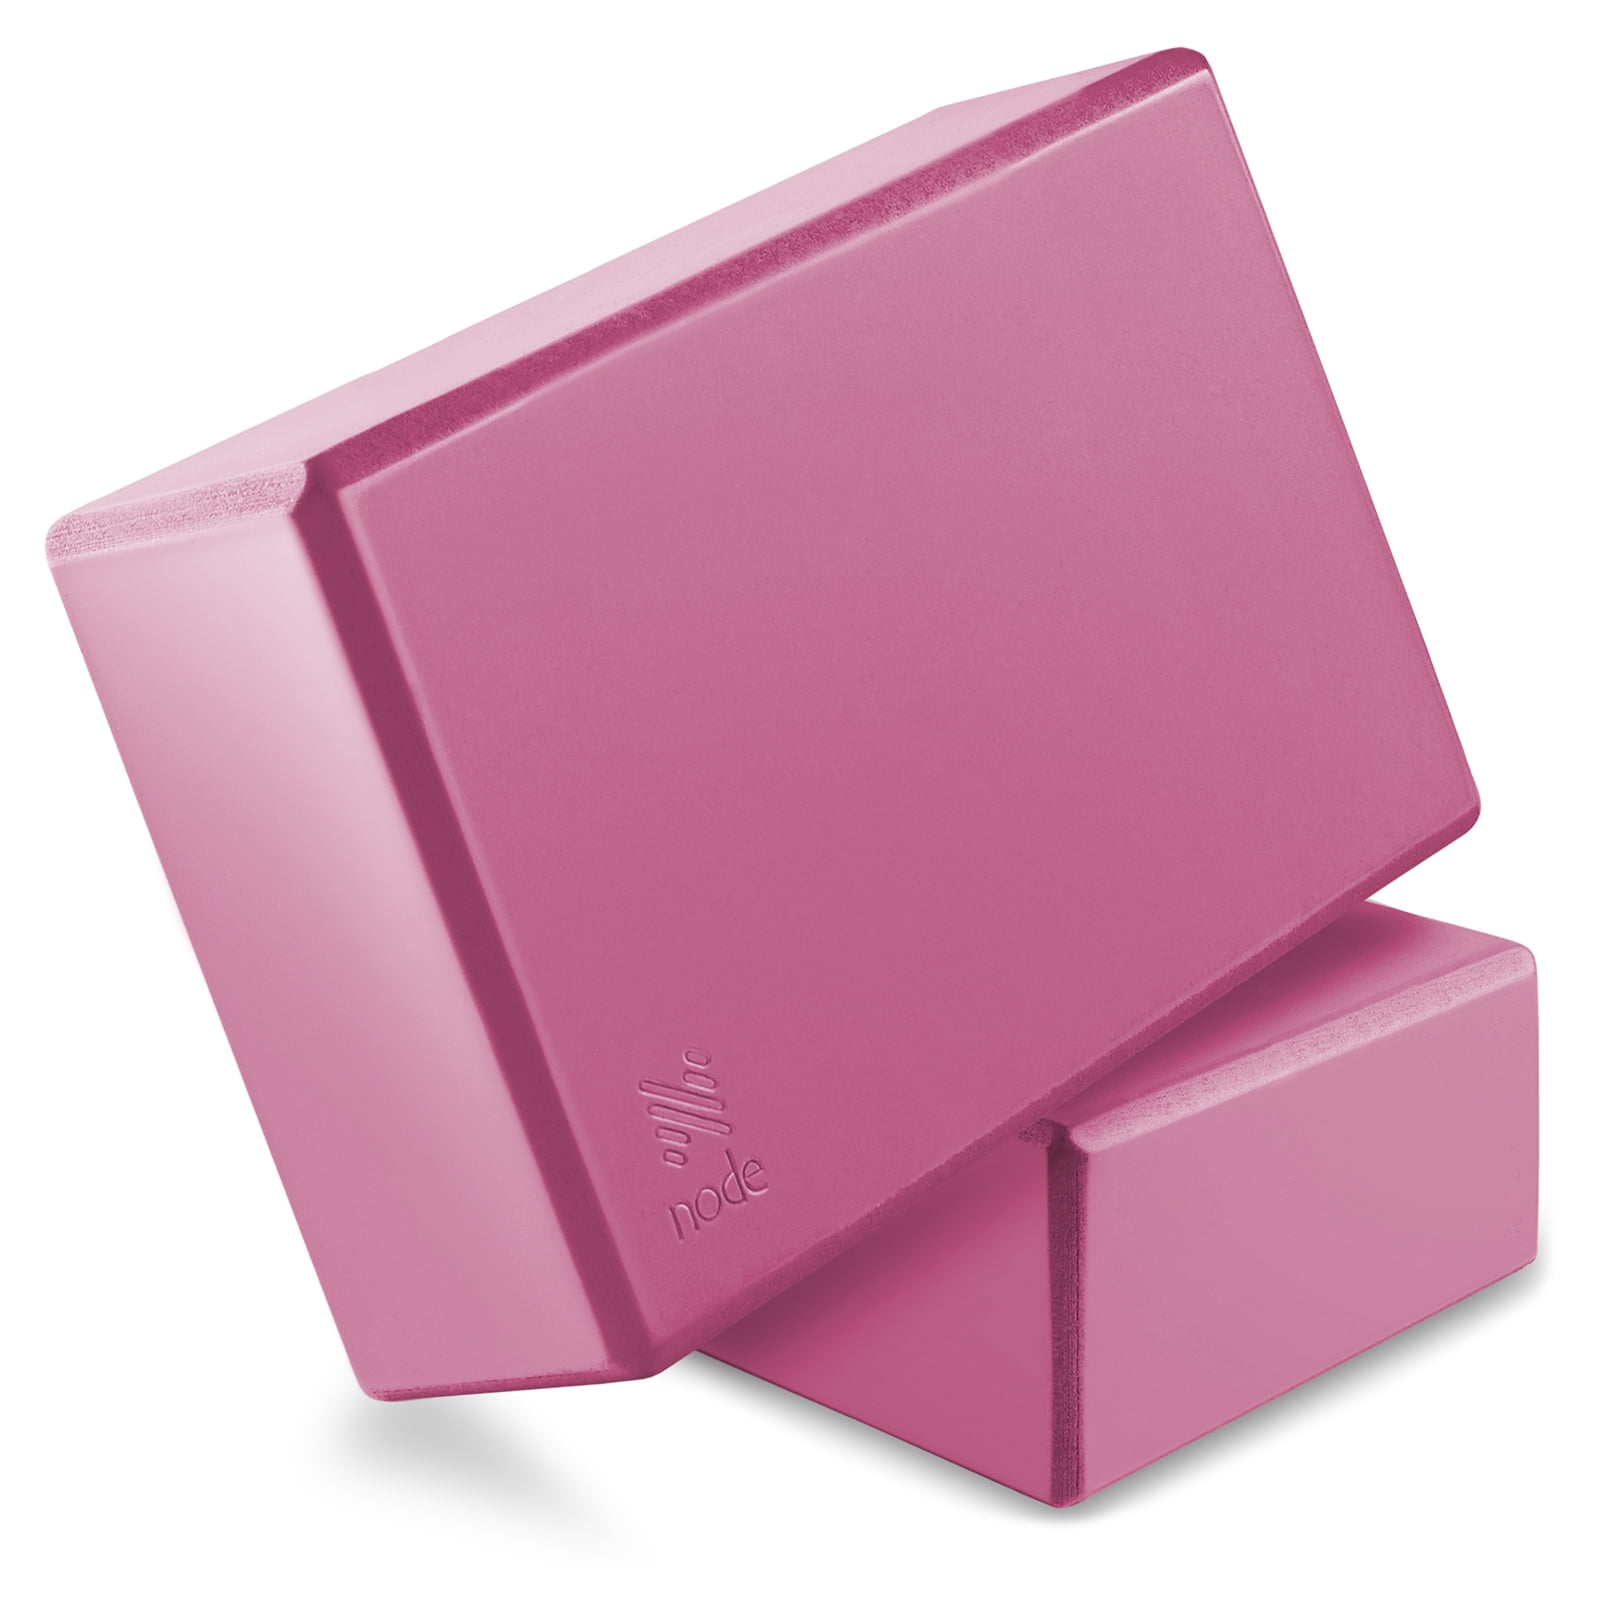 Details about   RDX Yoga Block Set Non-Slip High Density Eva Foam Brick Easy Grip Surface 